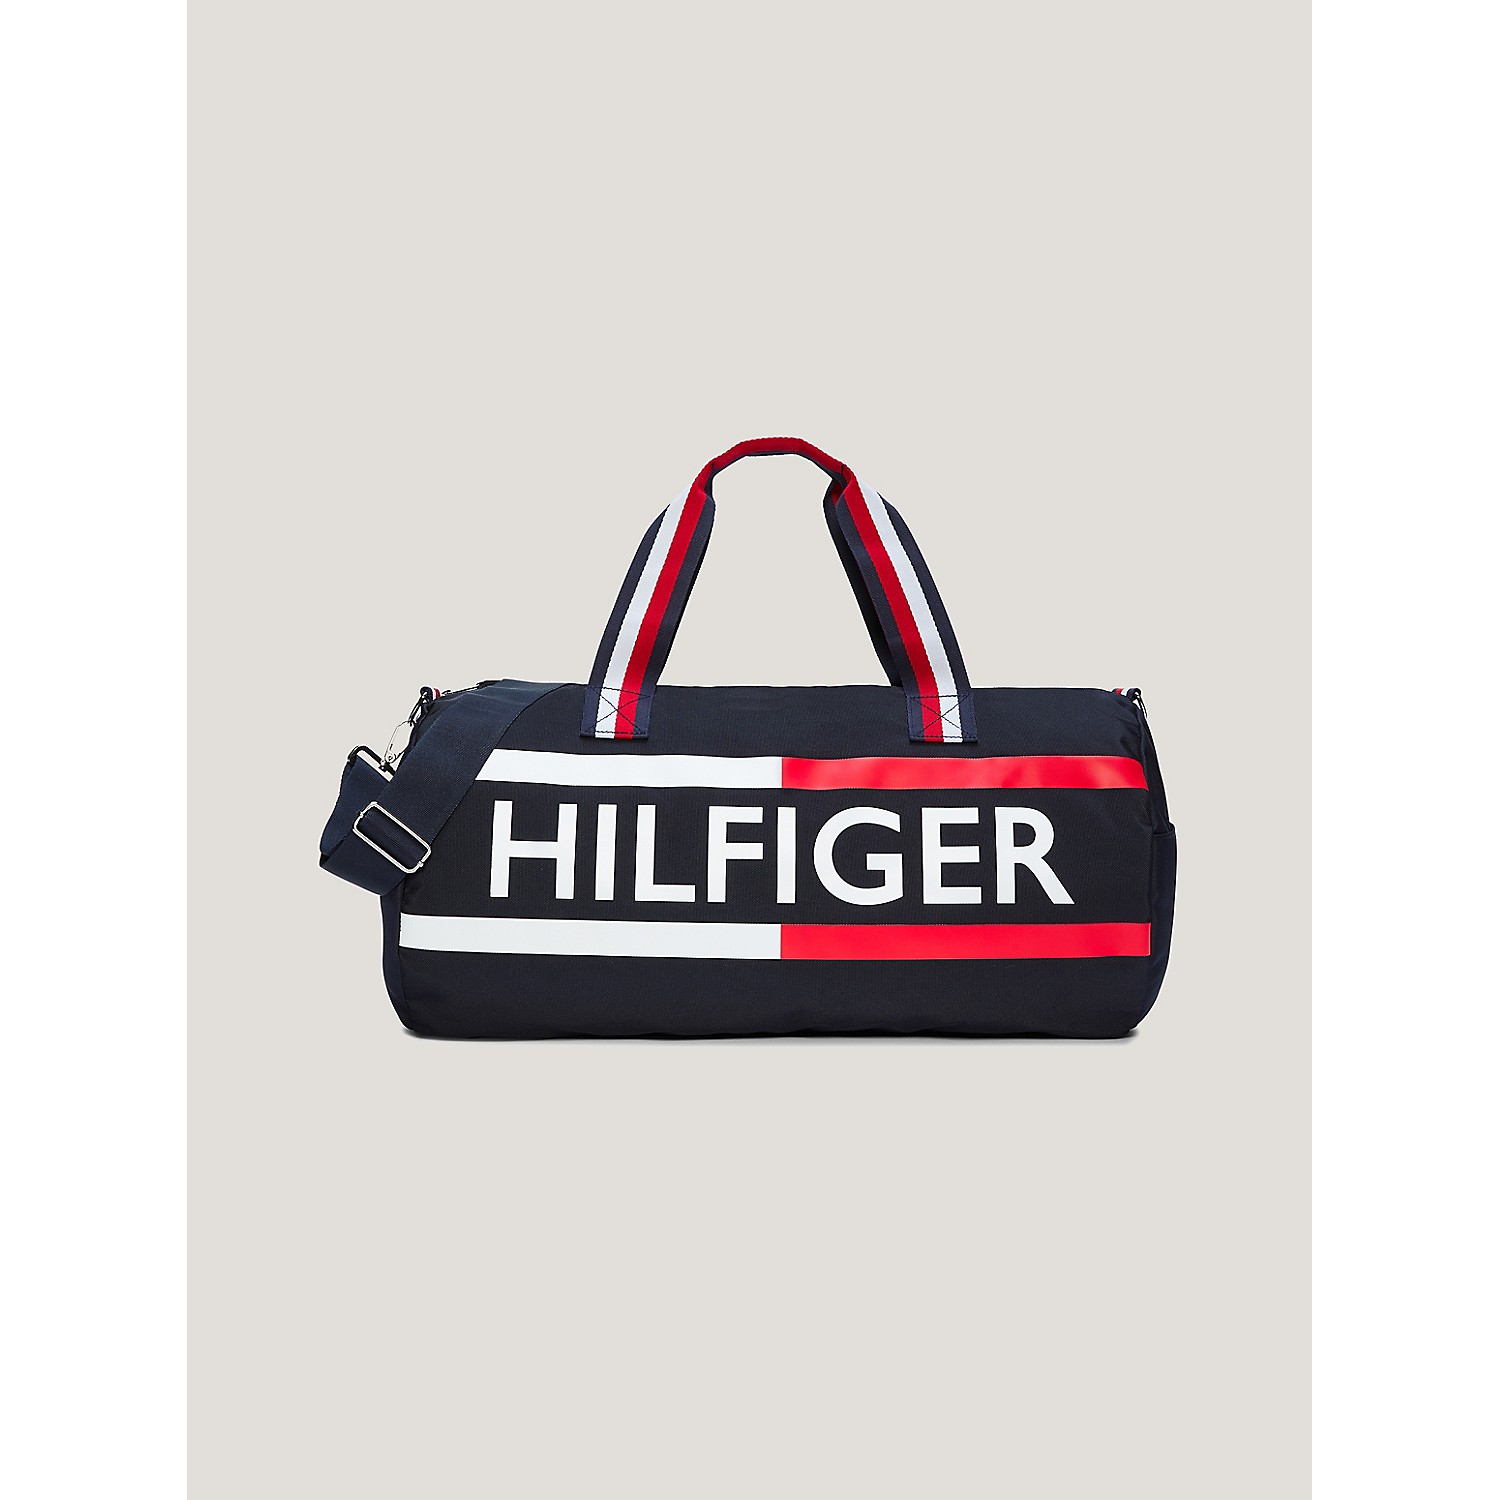 TOMMY HILFIGER Hilfiger Duffle Bag